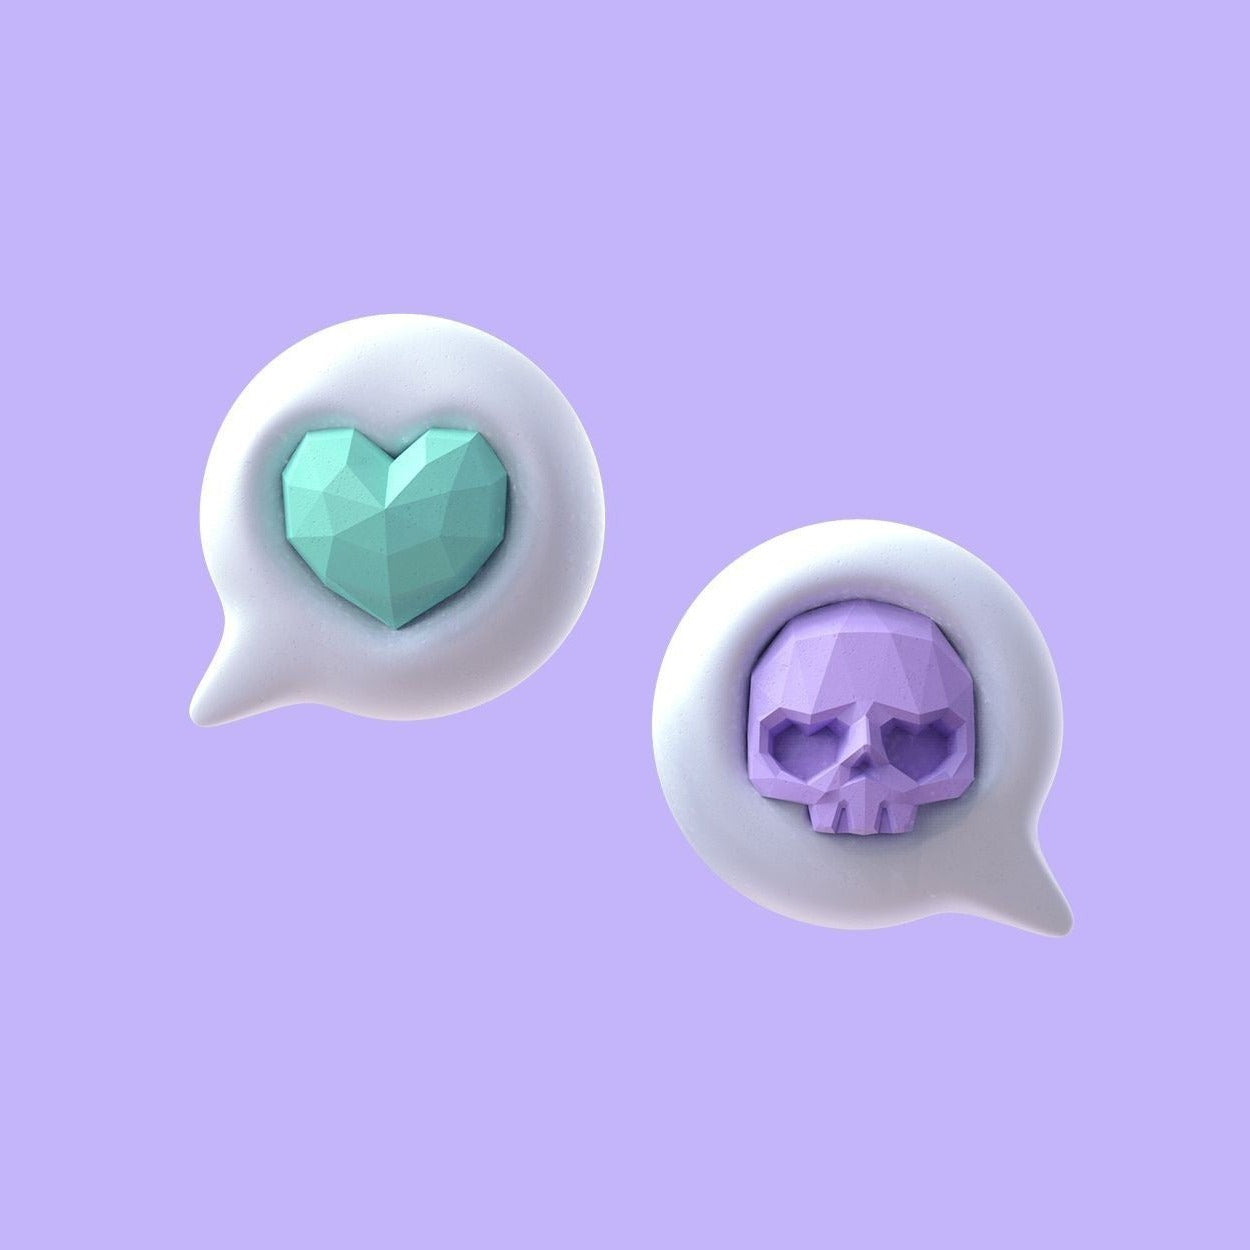 Skull heart balloon earrings B1708